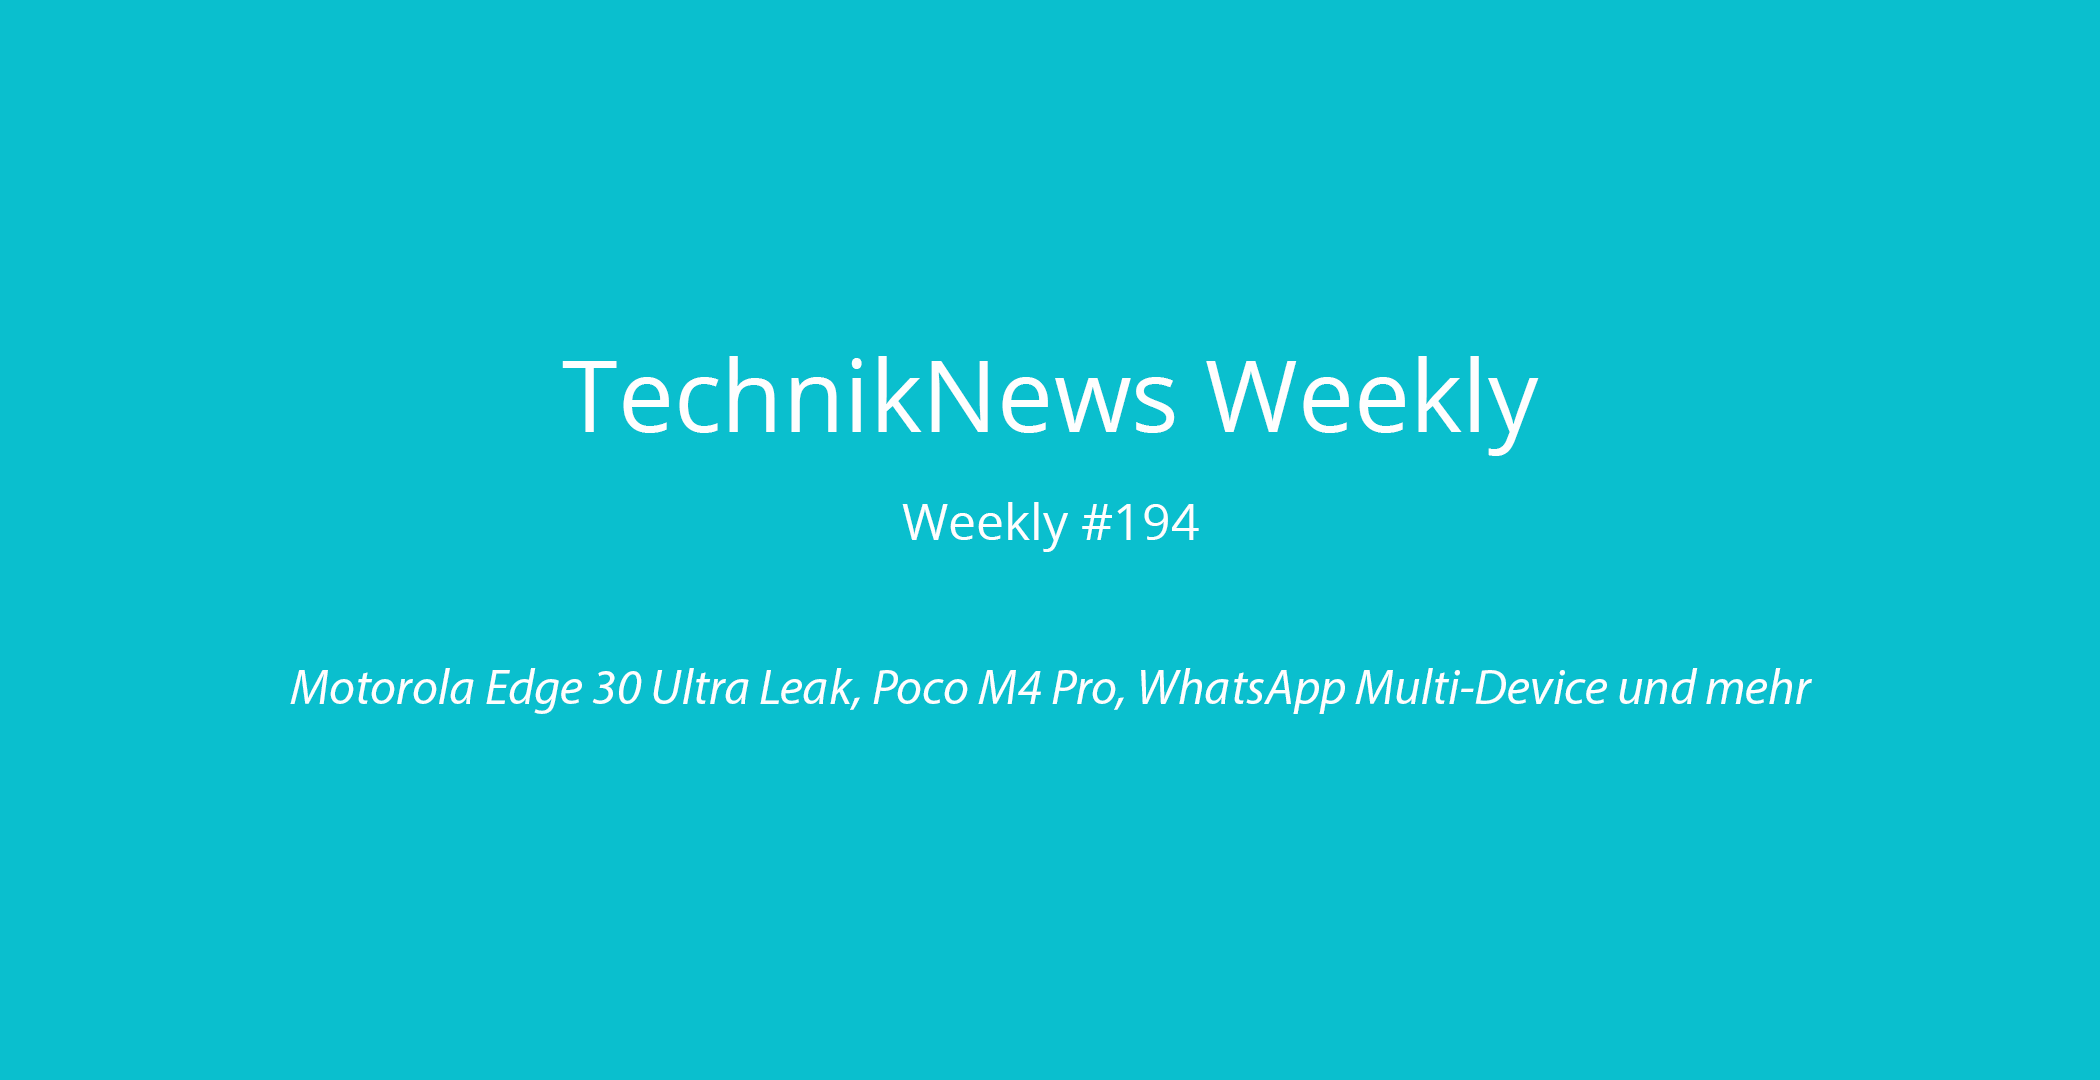 TechnikNews Weekly #194